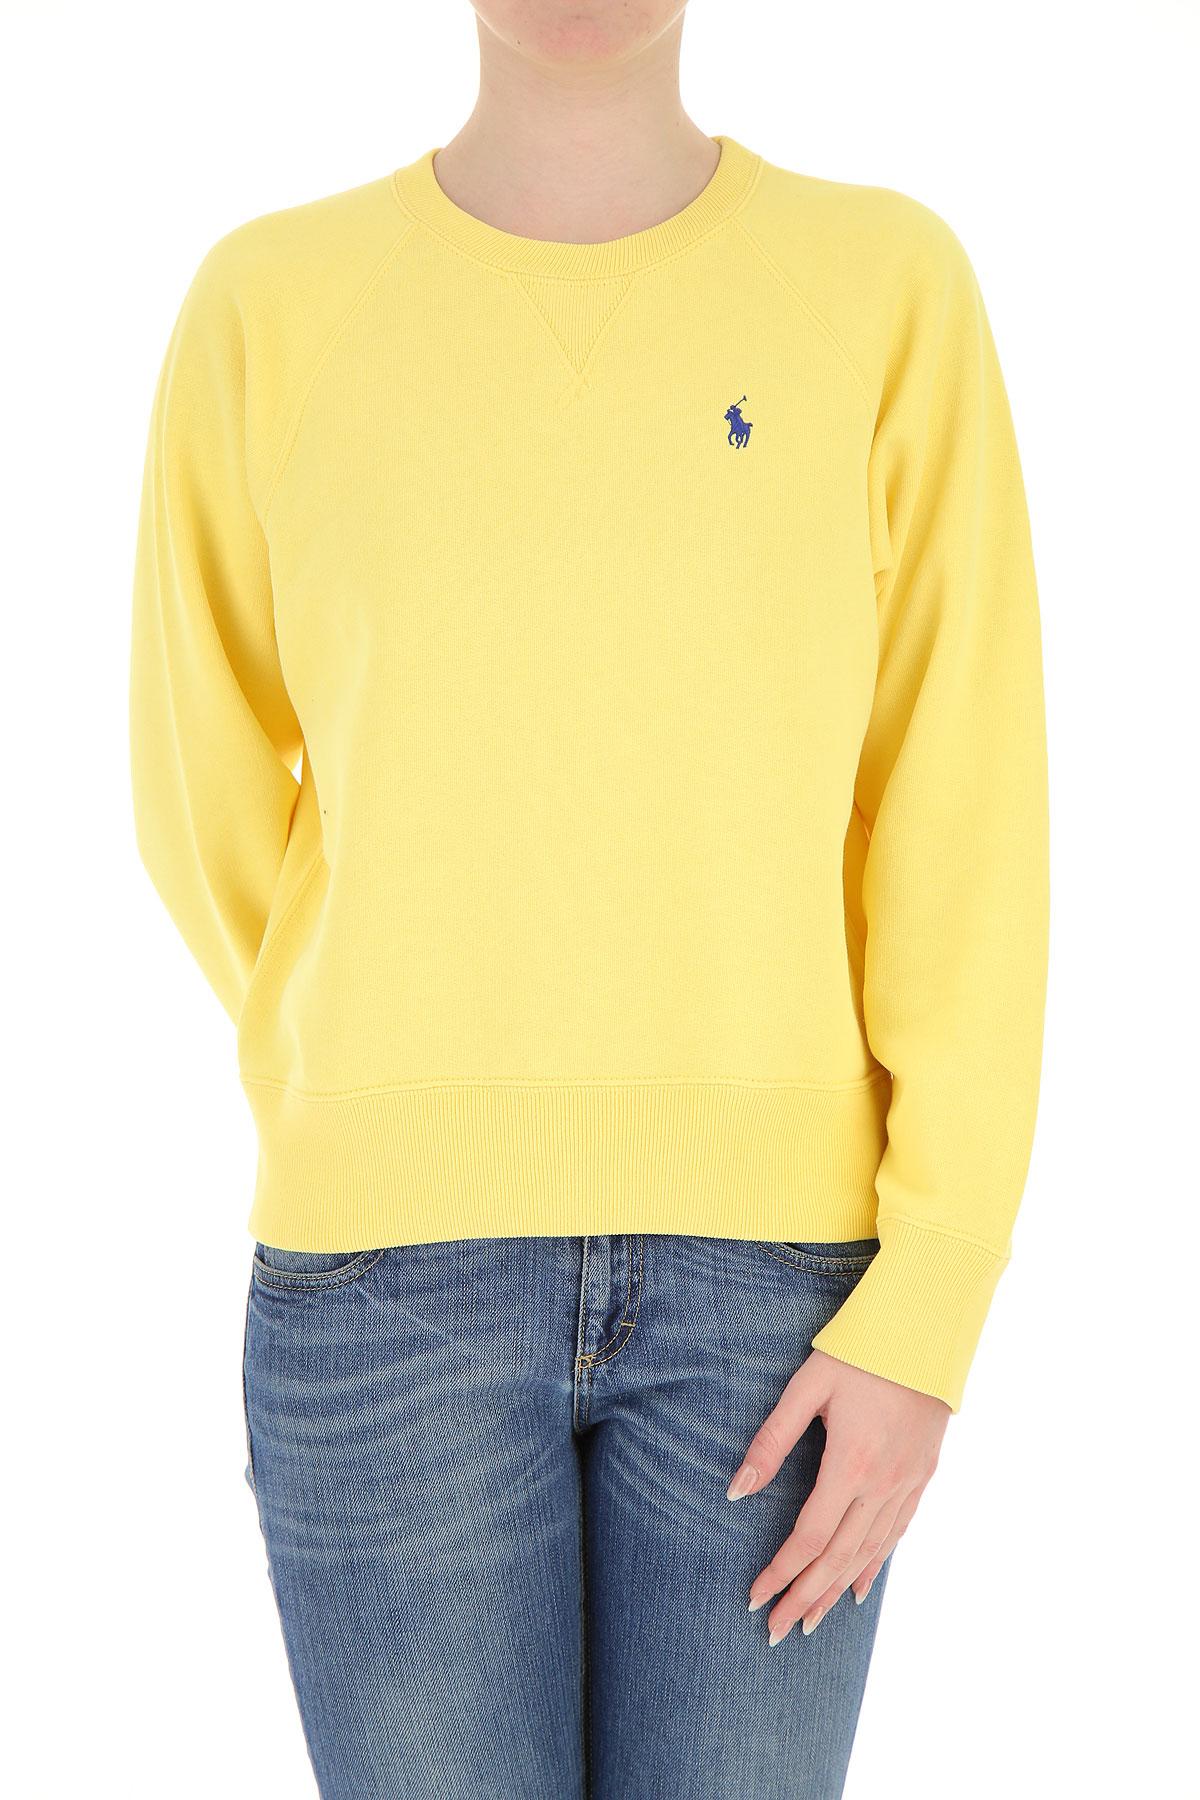 ralph lauren women's yellow sweater